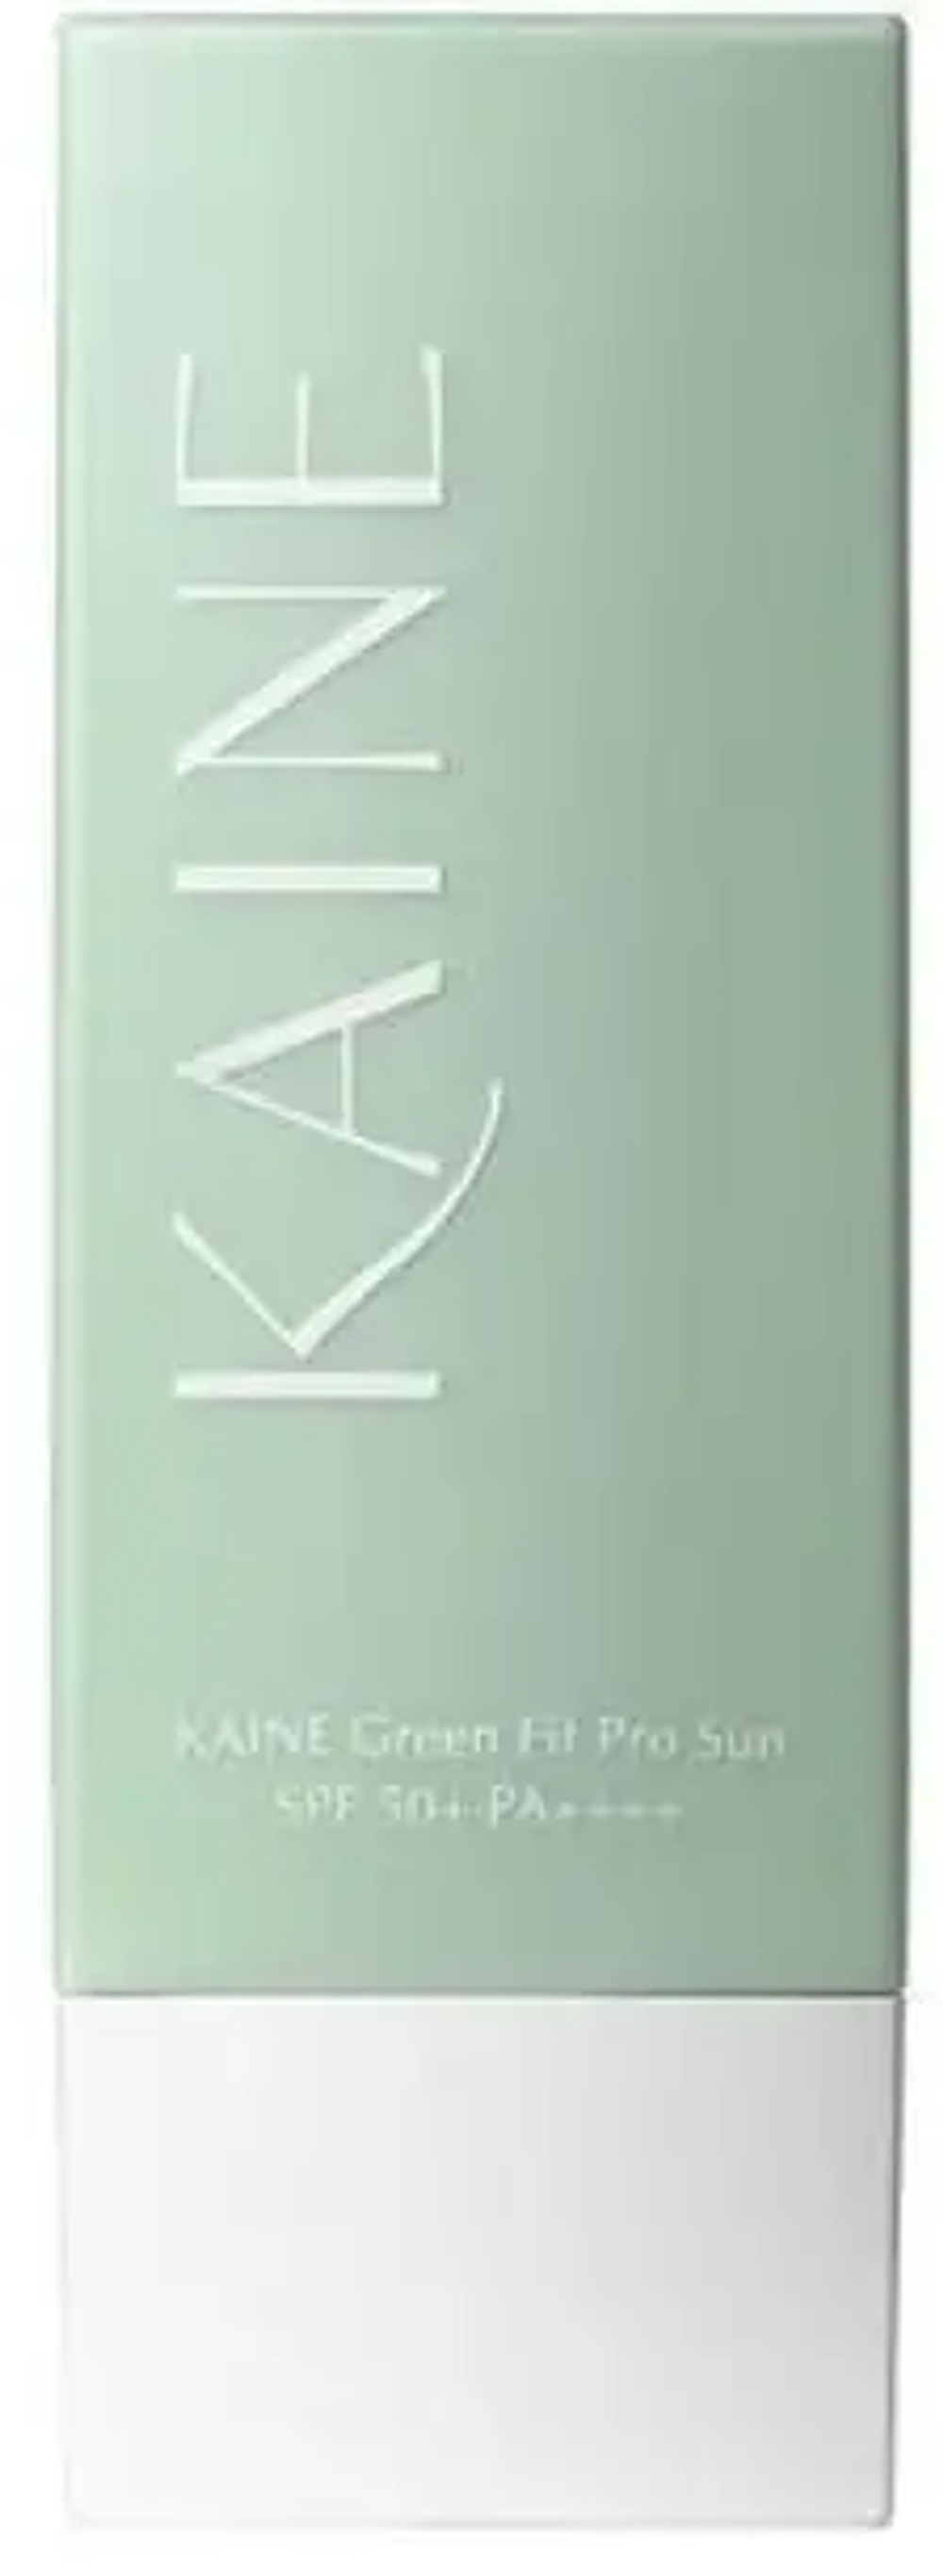 Kaine Green Fit Pro Sun солнцезащитный крем SPF 50+ PA++++ 55мл